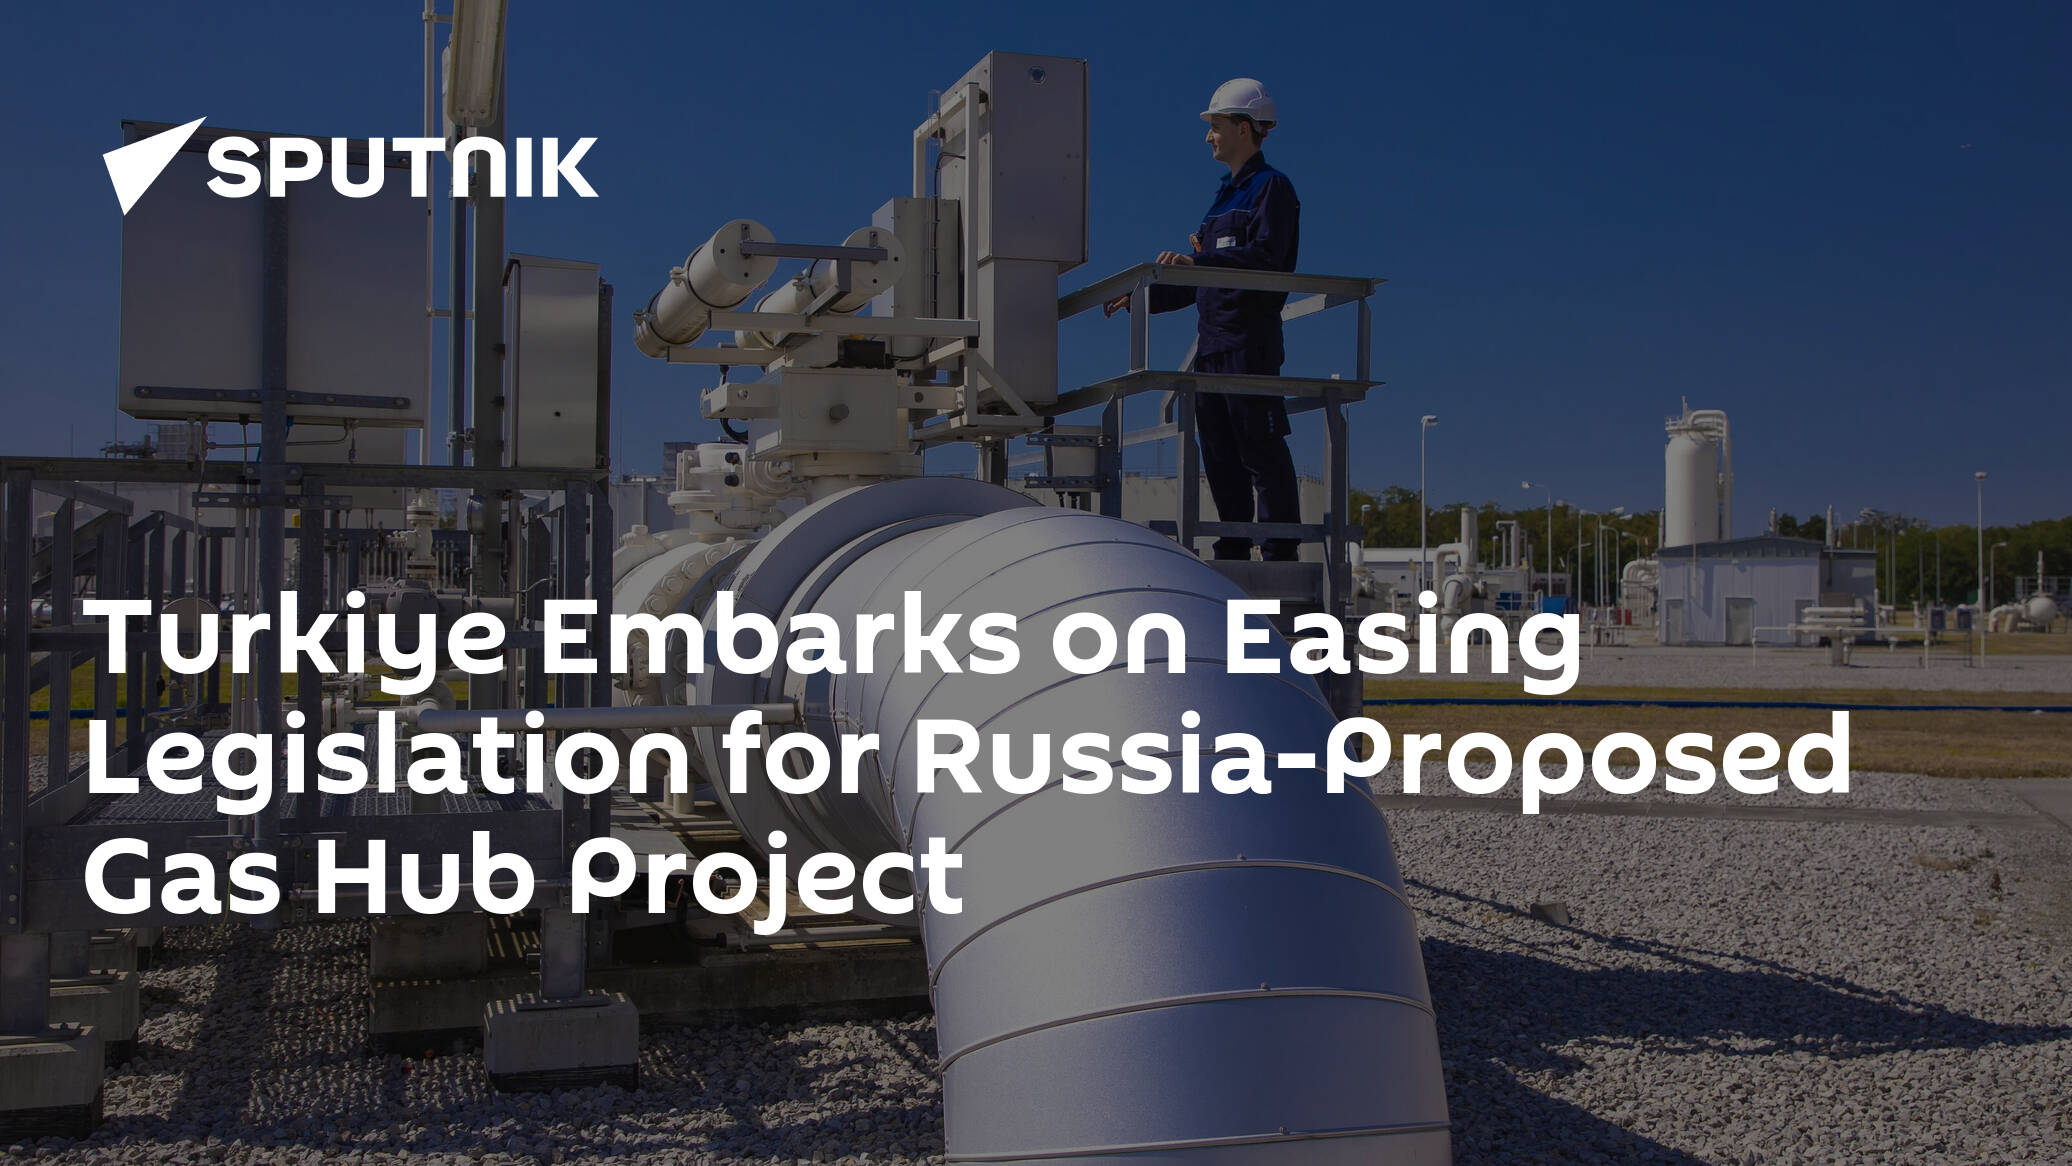 Turkiye Starts Legislative Process for Russia-Proposed Gas Hub Project